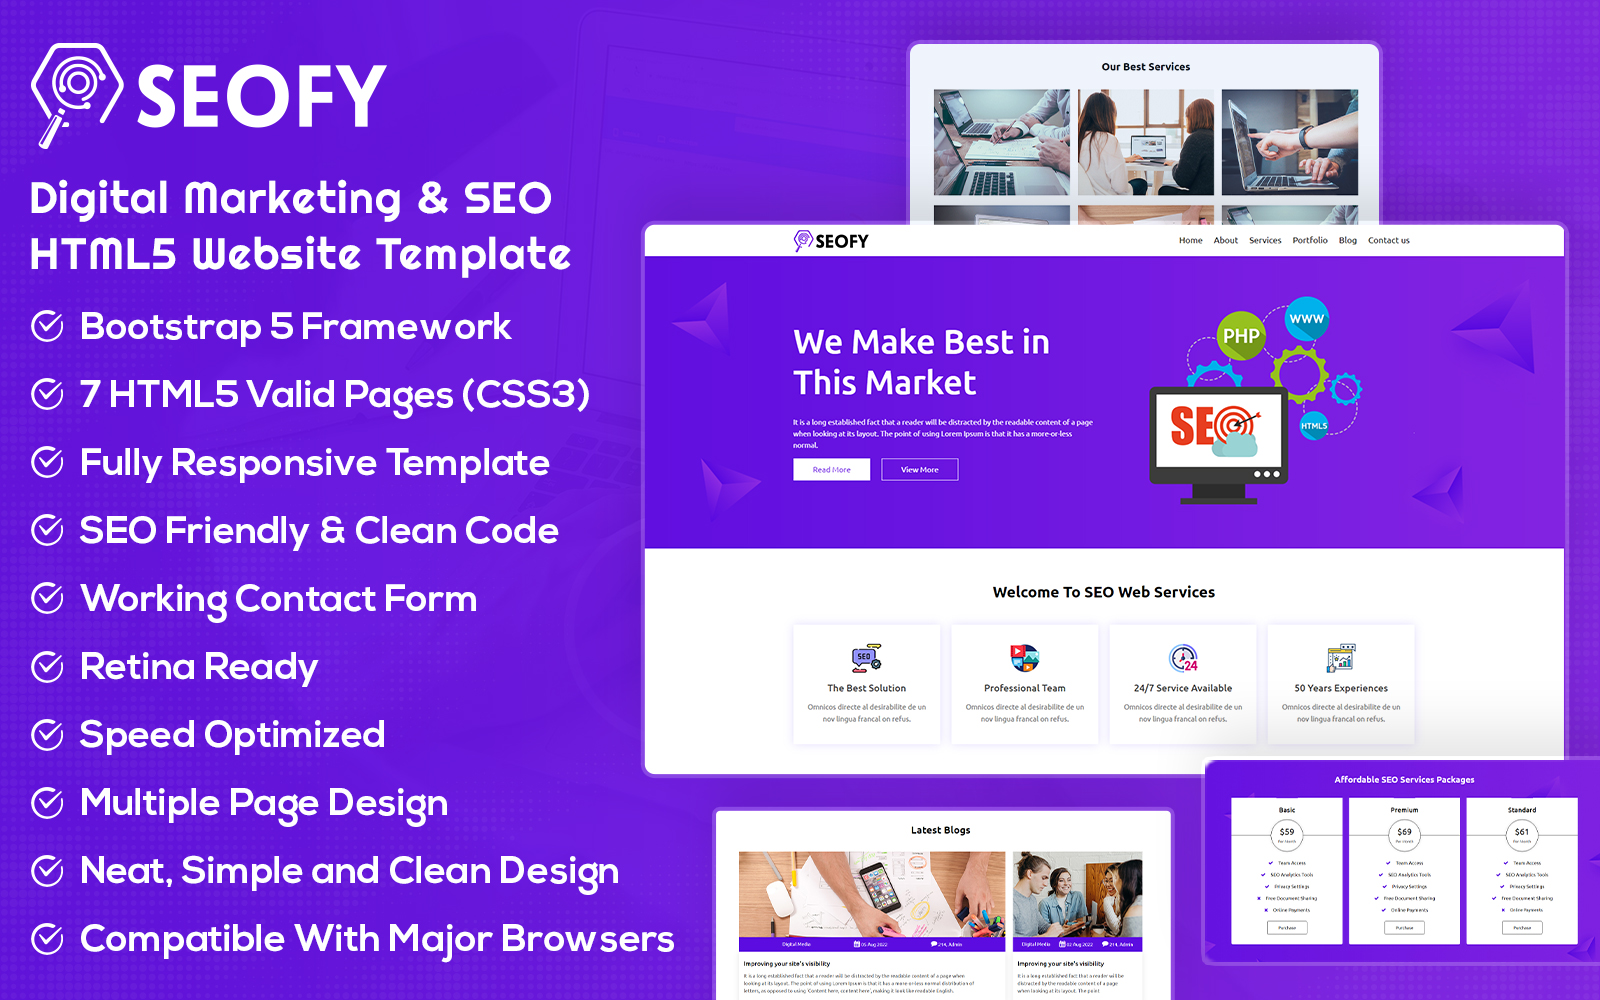 SEOFY - Digital Marketing & SEO HTML5 Website Template